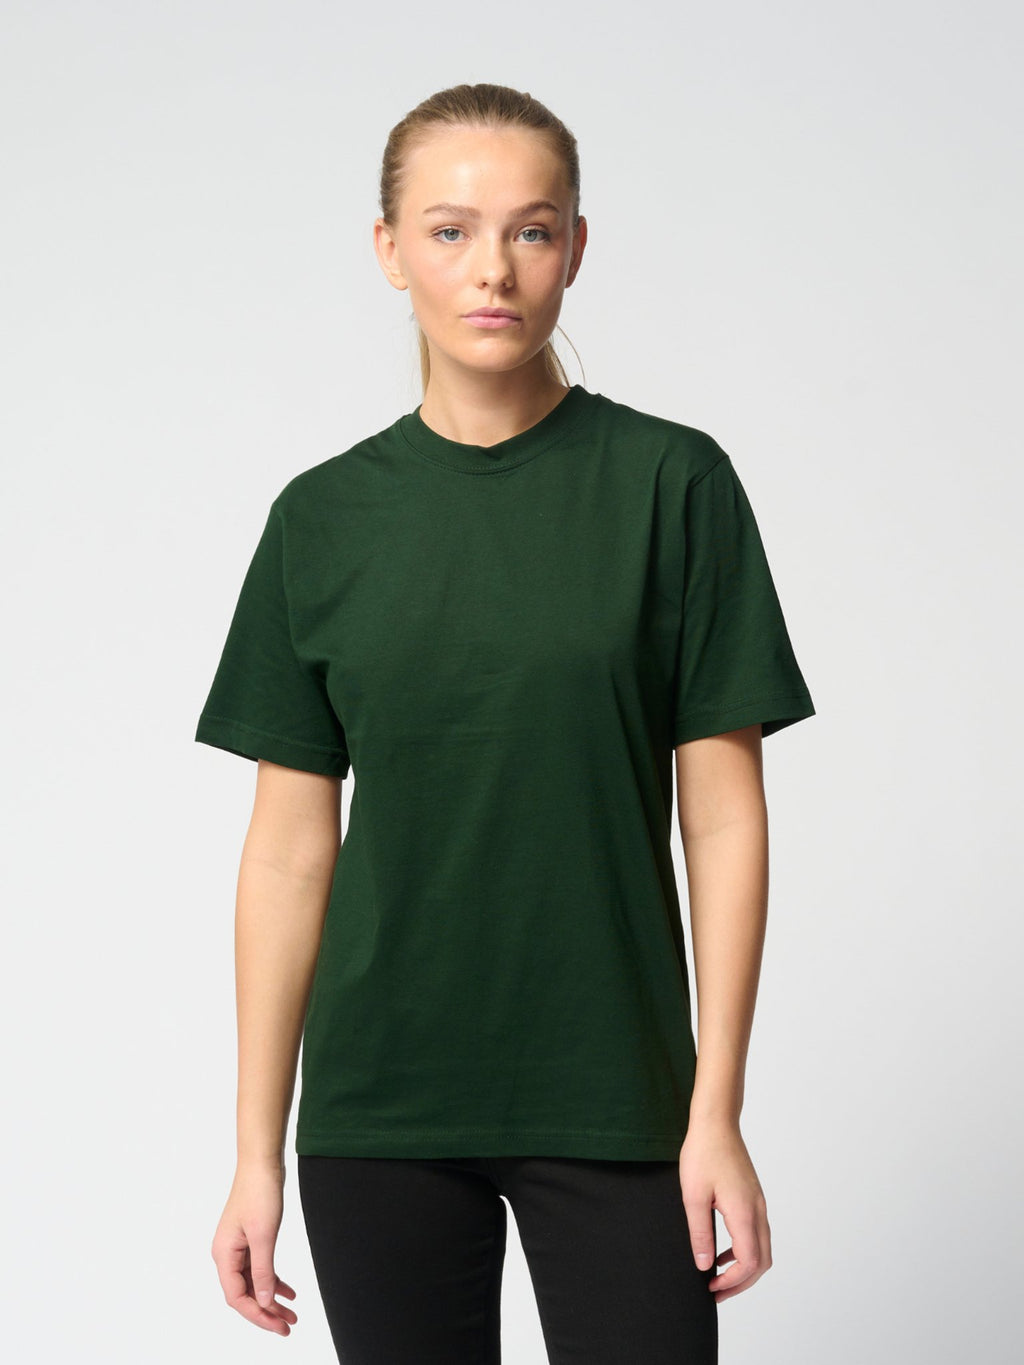 Oversized T-Shirt – Women's Package Deal (3 pcs.)